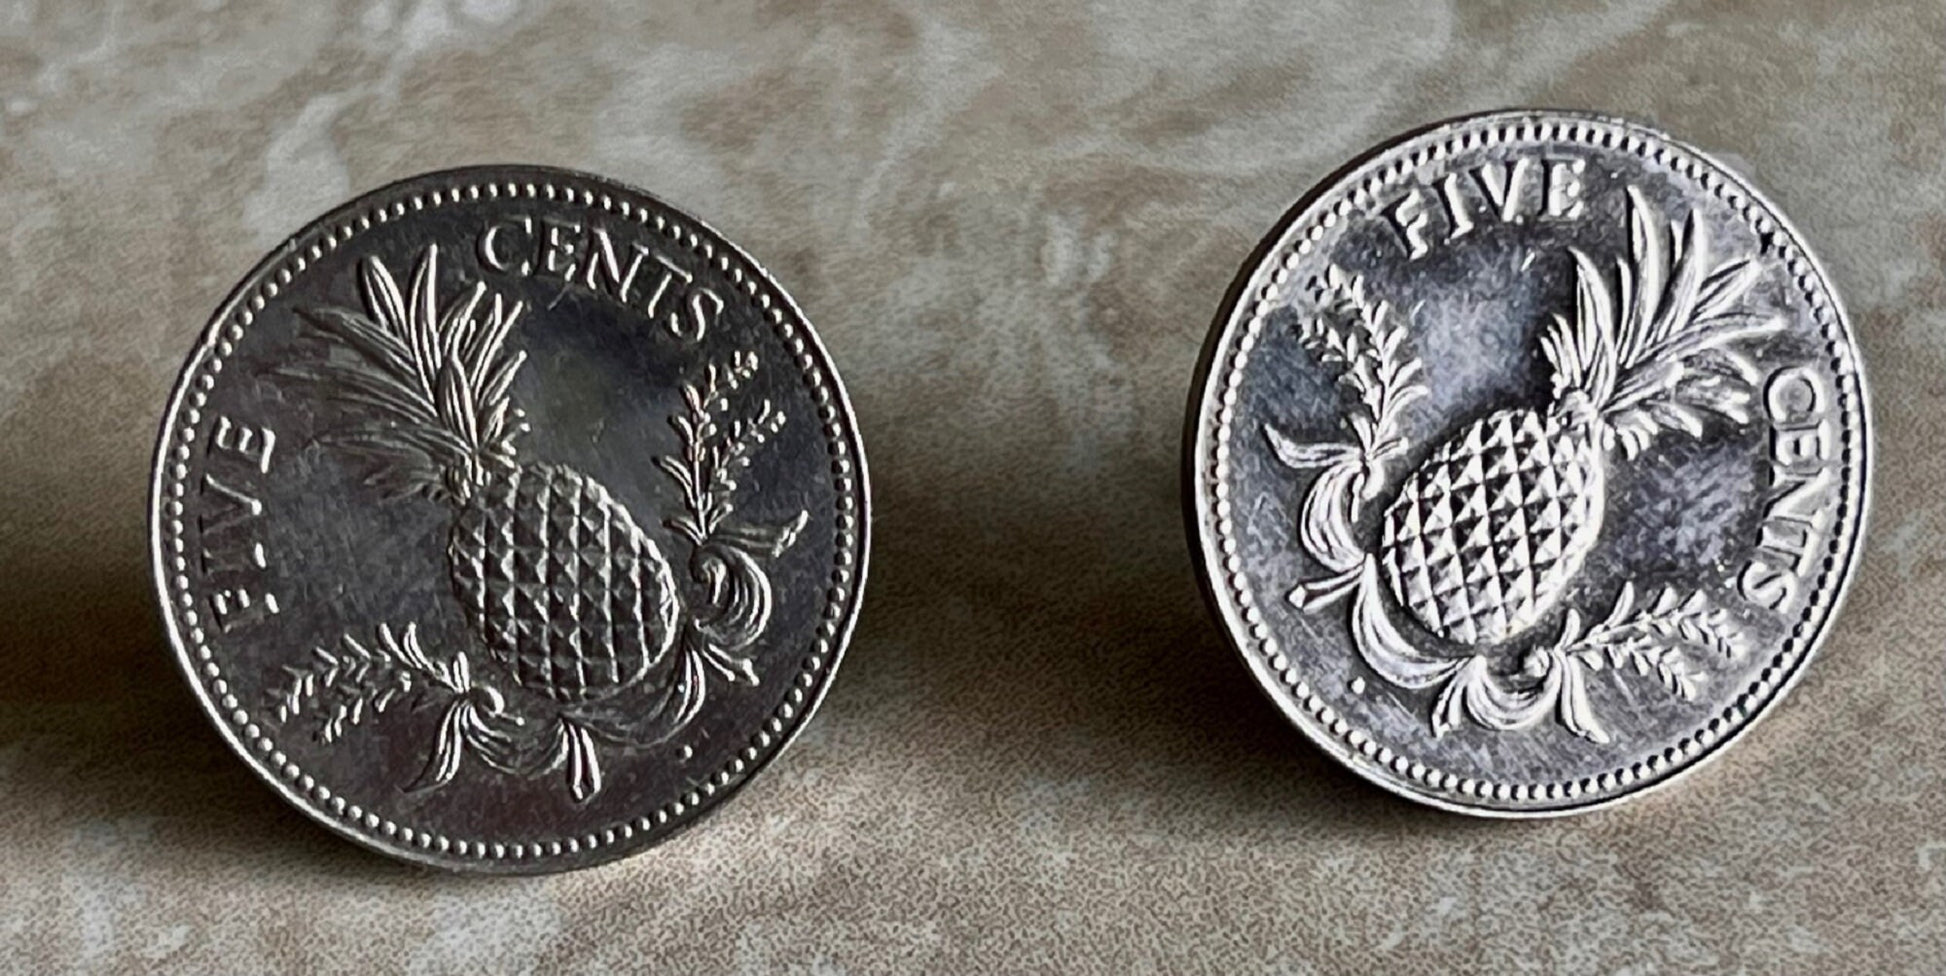 Bahamas Pineapple Coin Stud Earrings Set Five Cent Coin Custom Made Rare Coins Coin Enthusiast Fashion Accessory Handmade